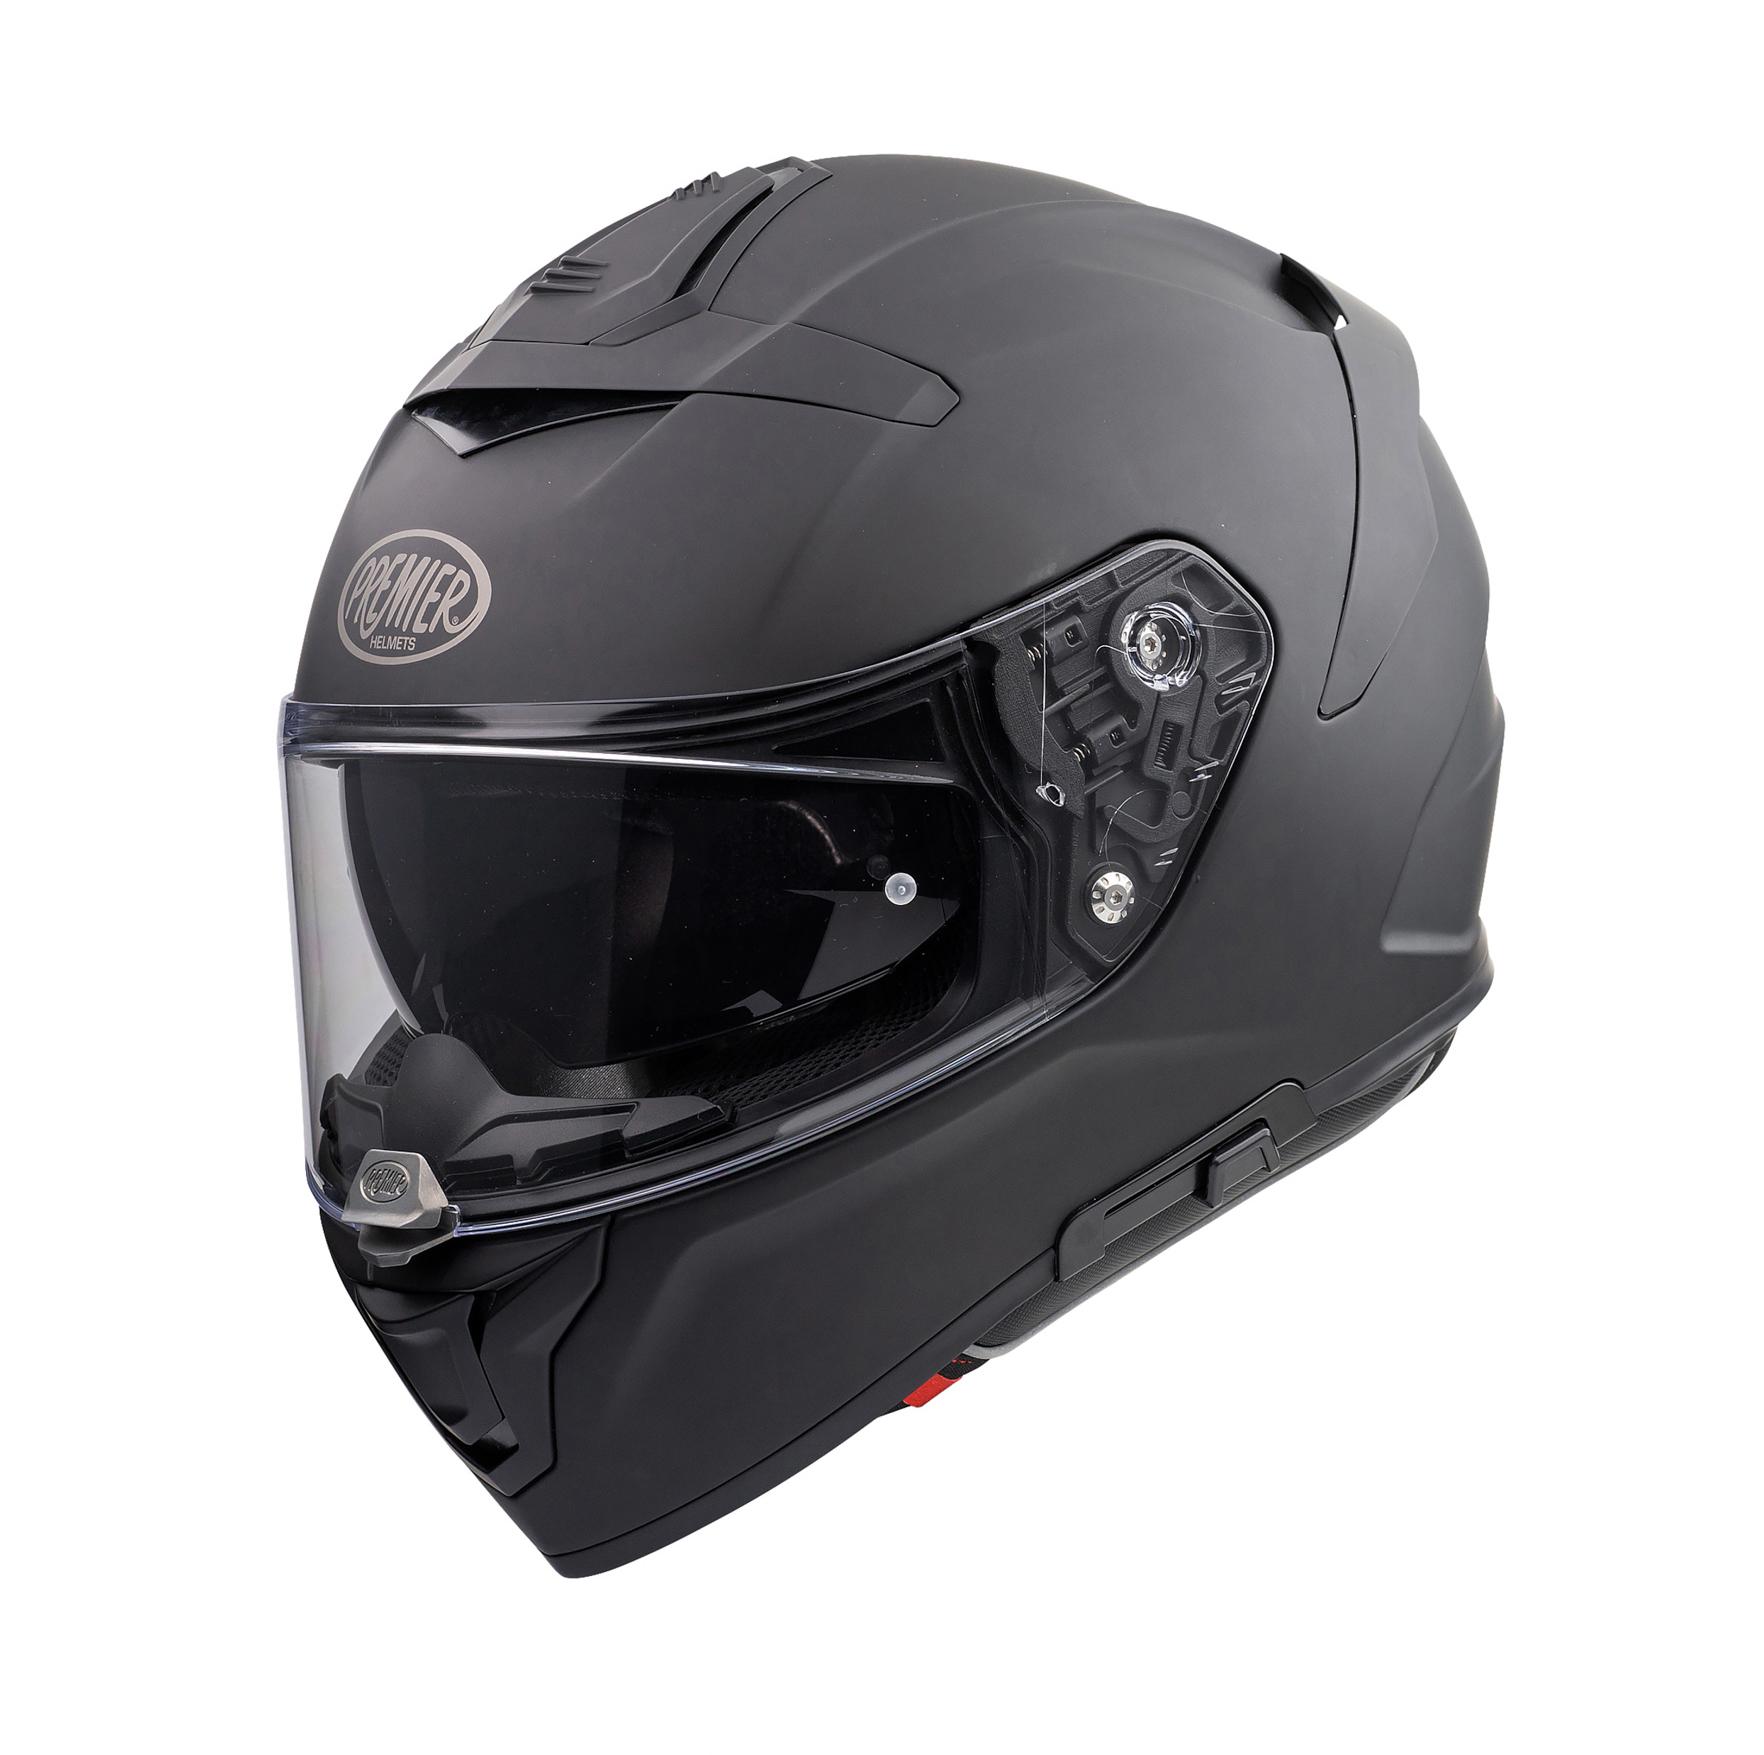 Premier Devil U9 Full Face Motorcycle Helmet - Matt Black, M